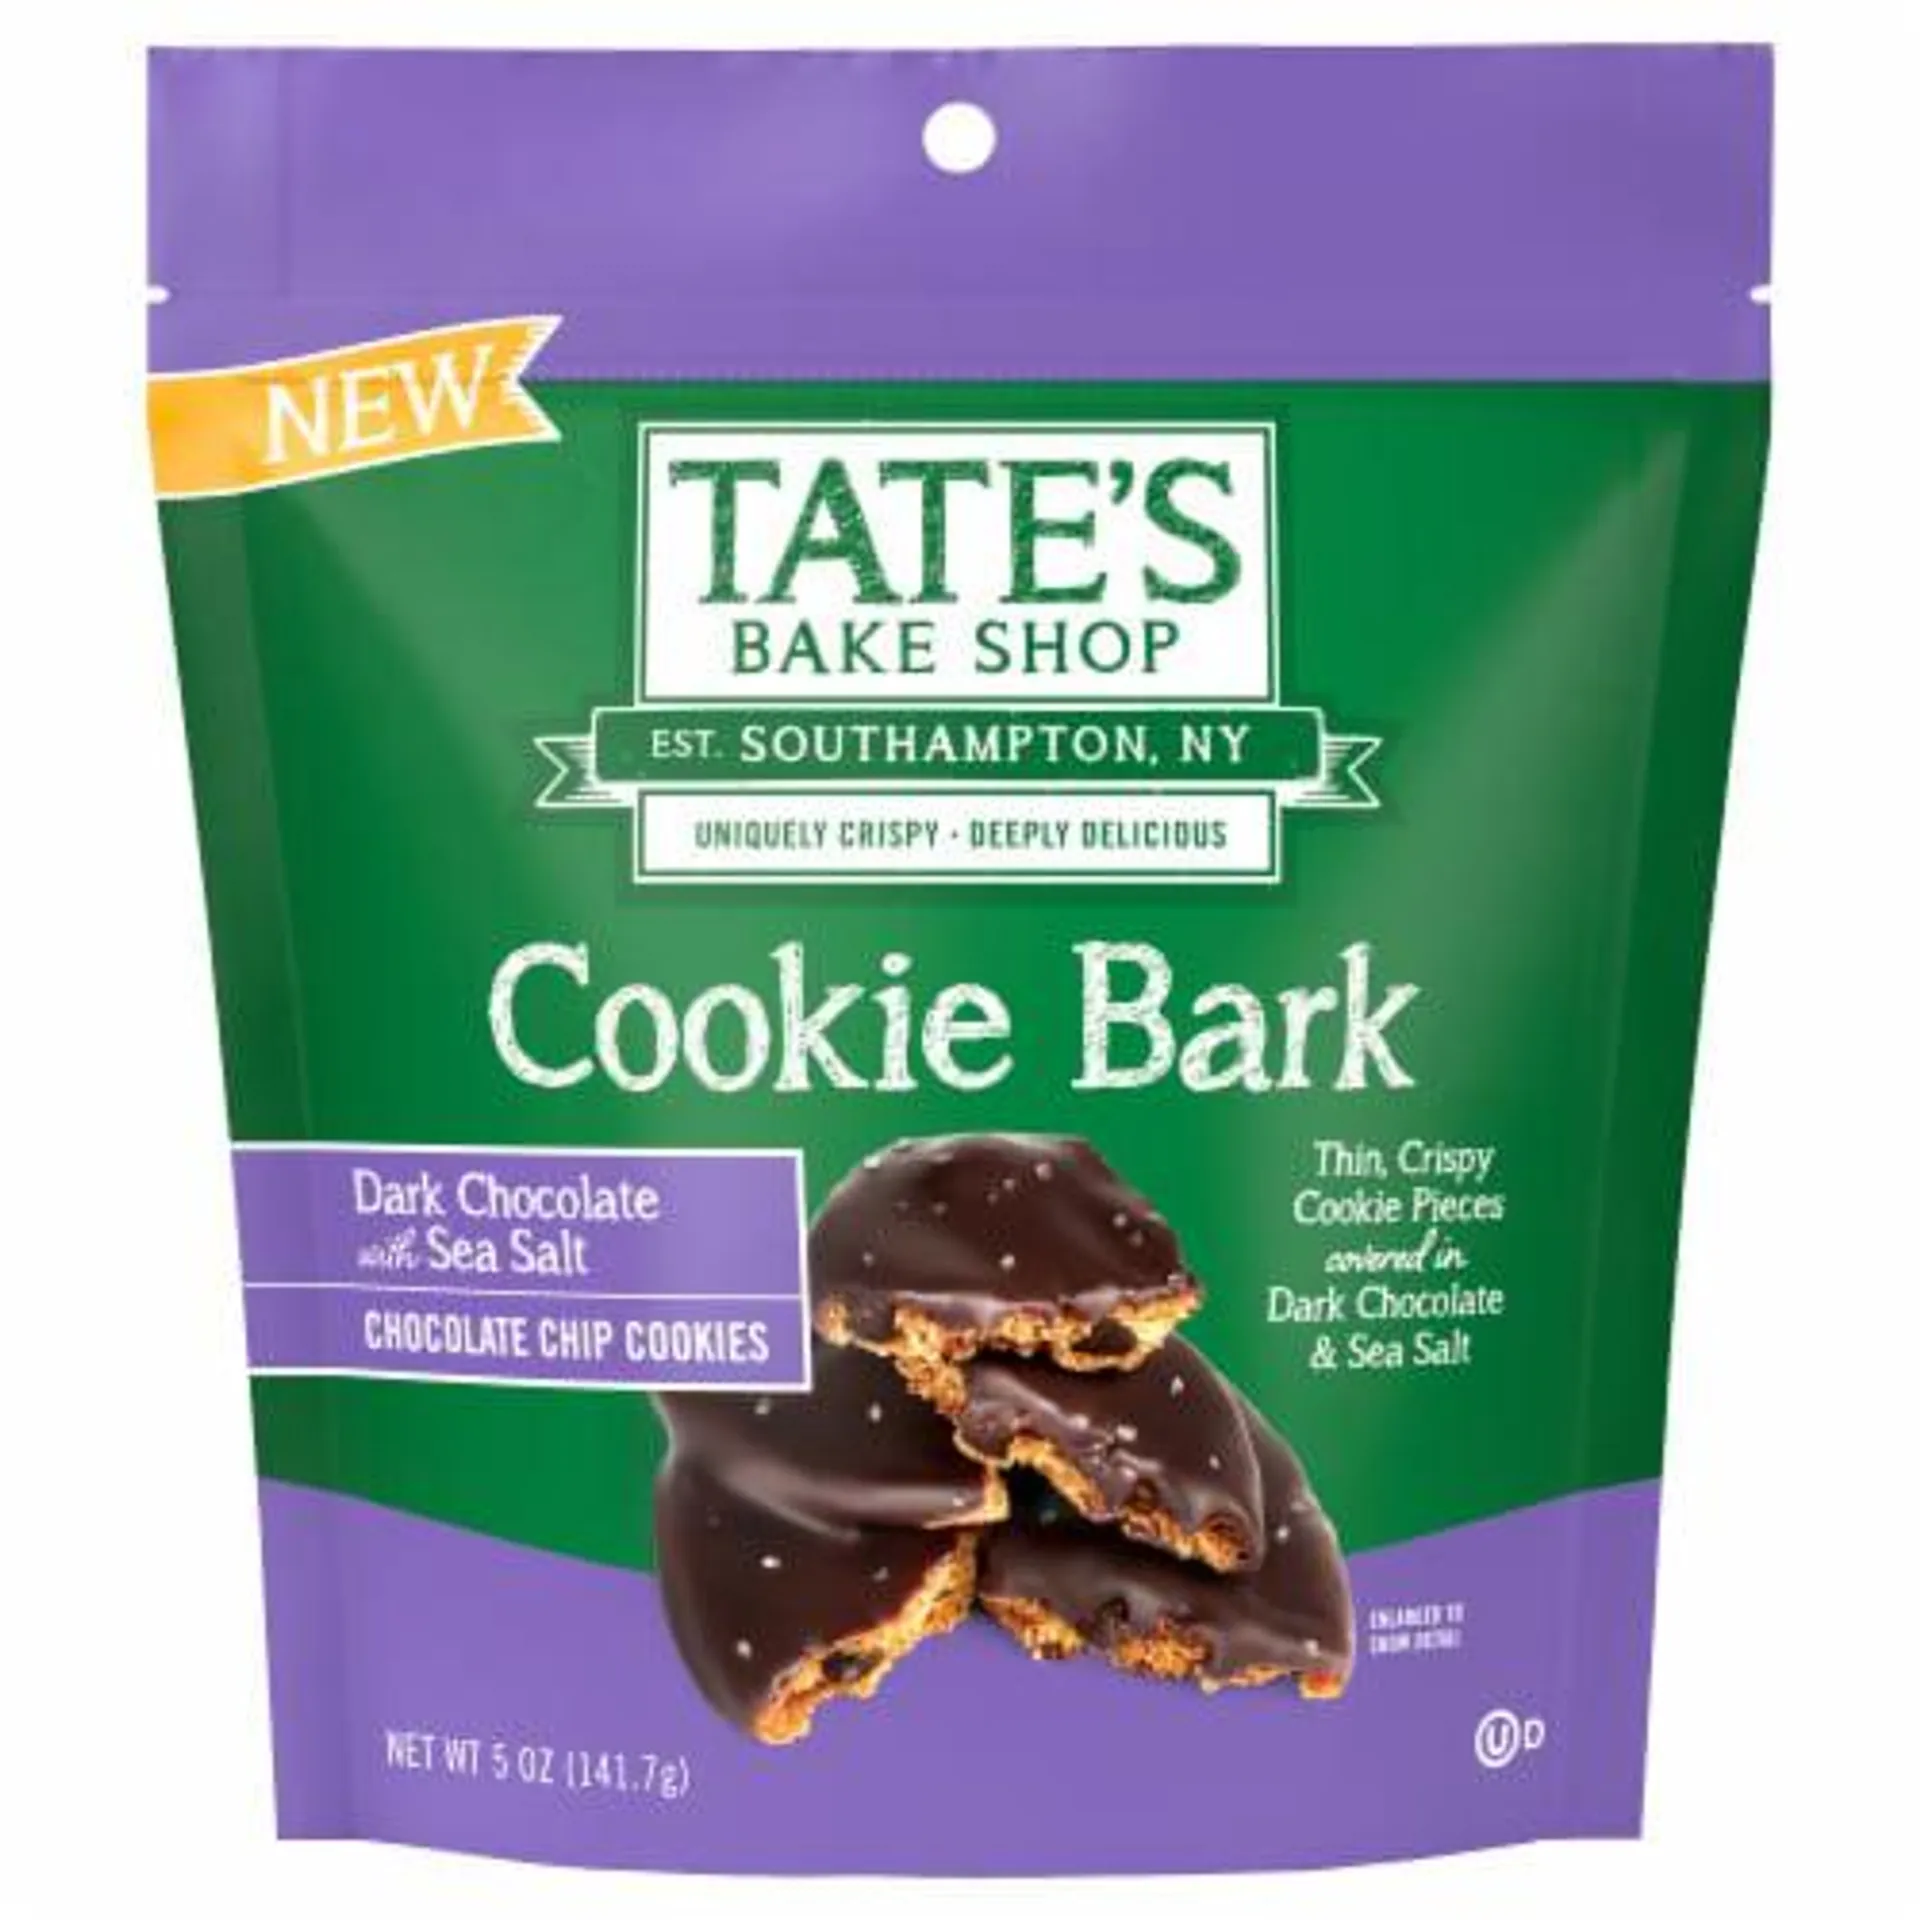 Tate's Bake Shop Cookie Bark Chocolate Chip Cookies With Dark Chocolate And Sea Salt